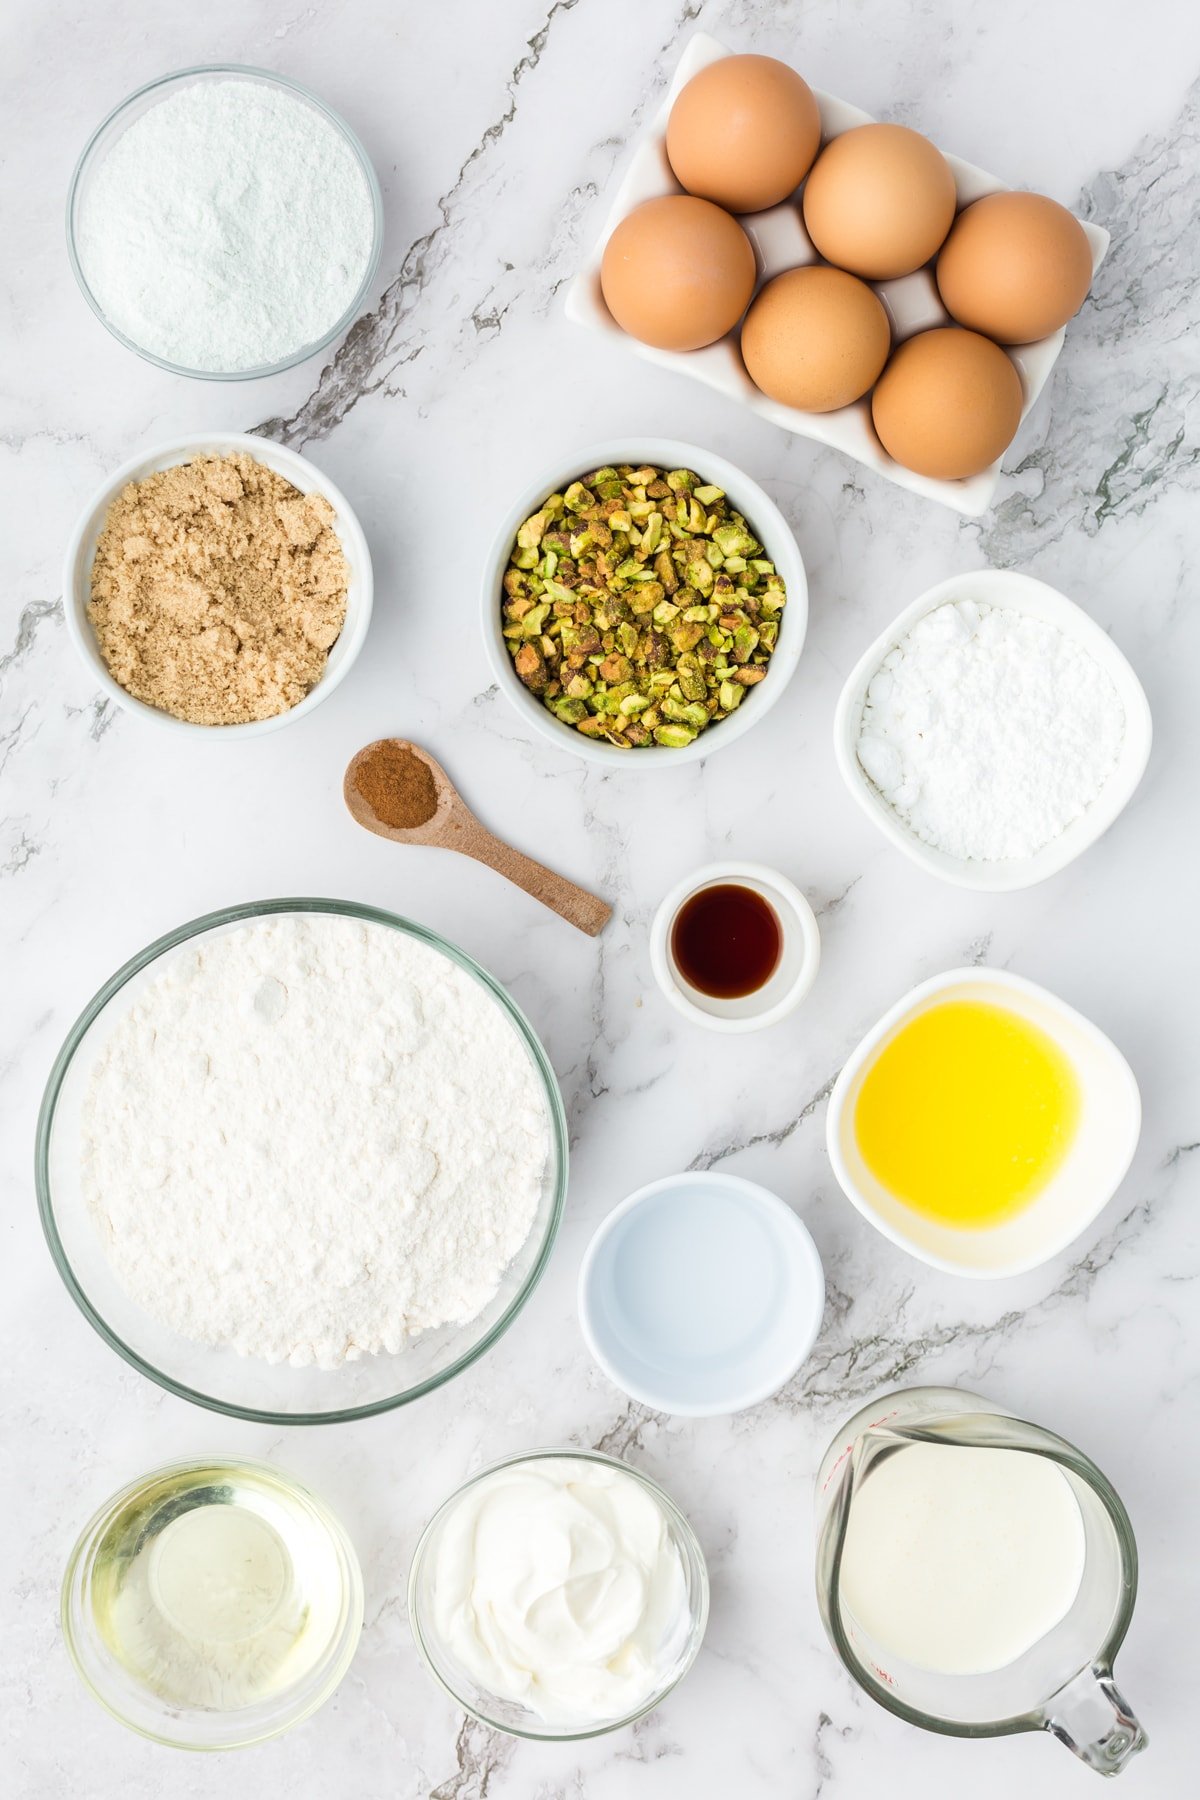 ingredients needed to make pistachio bread